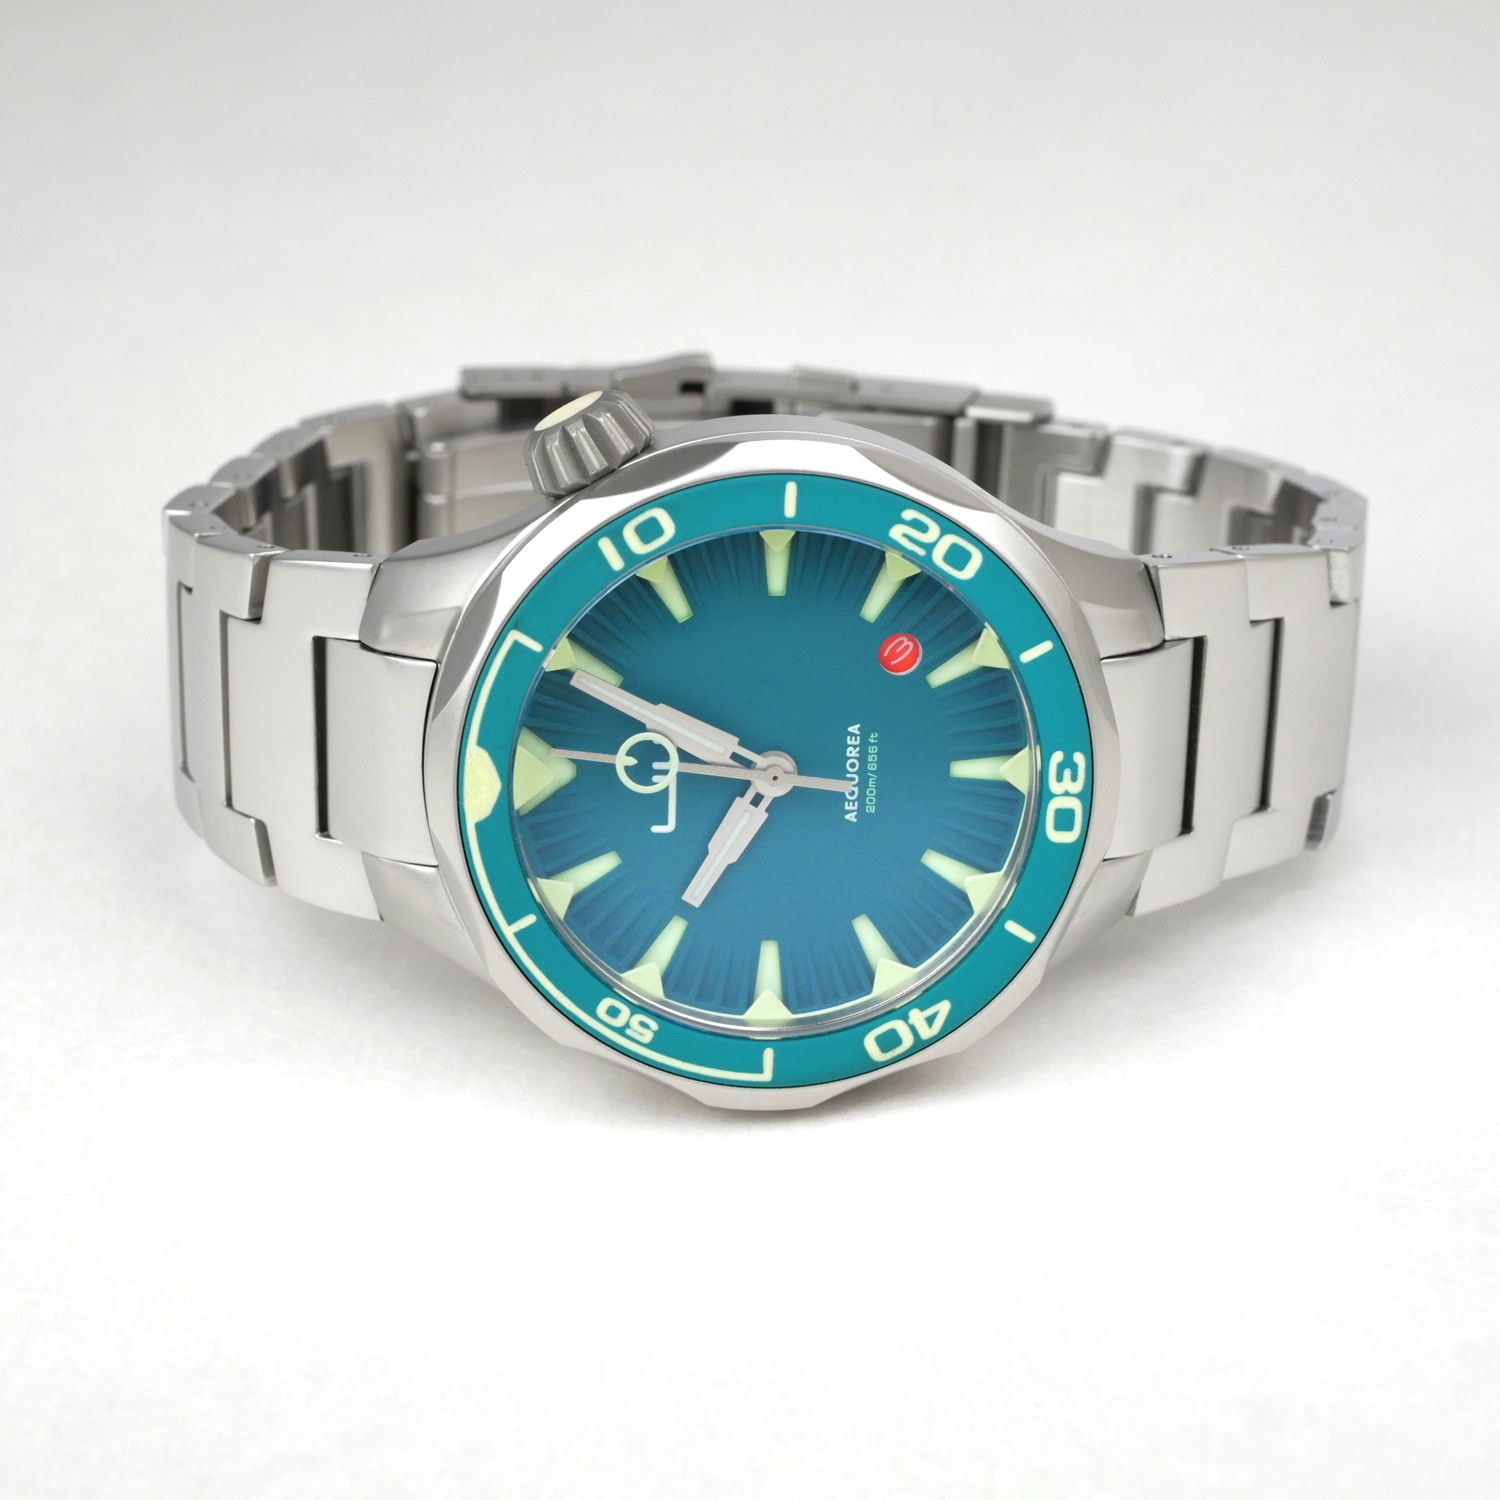 Aequorea Automatic Men's Diver Watch Dark Turquoise Bezel / Dark Turquoise Dial - Click Image to Close